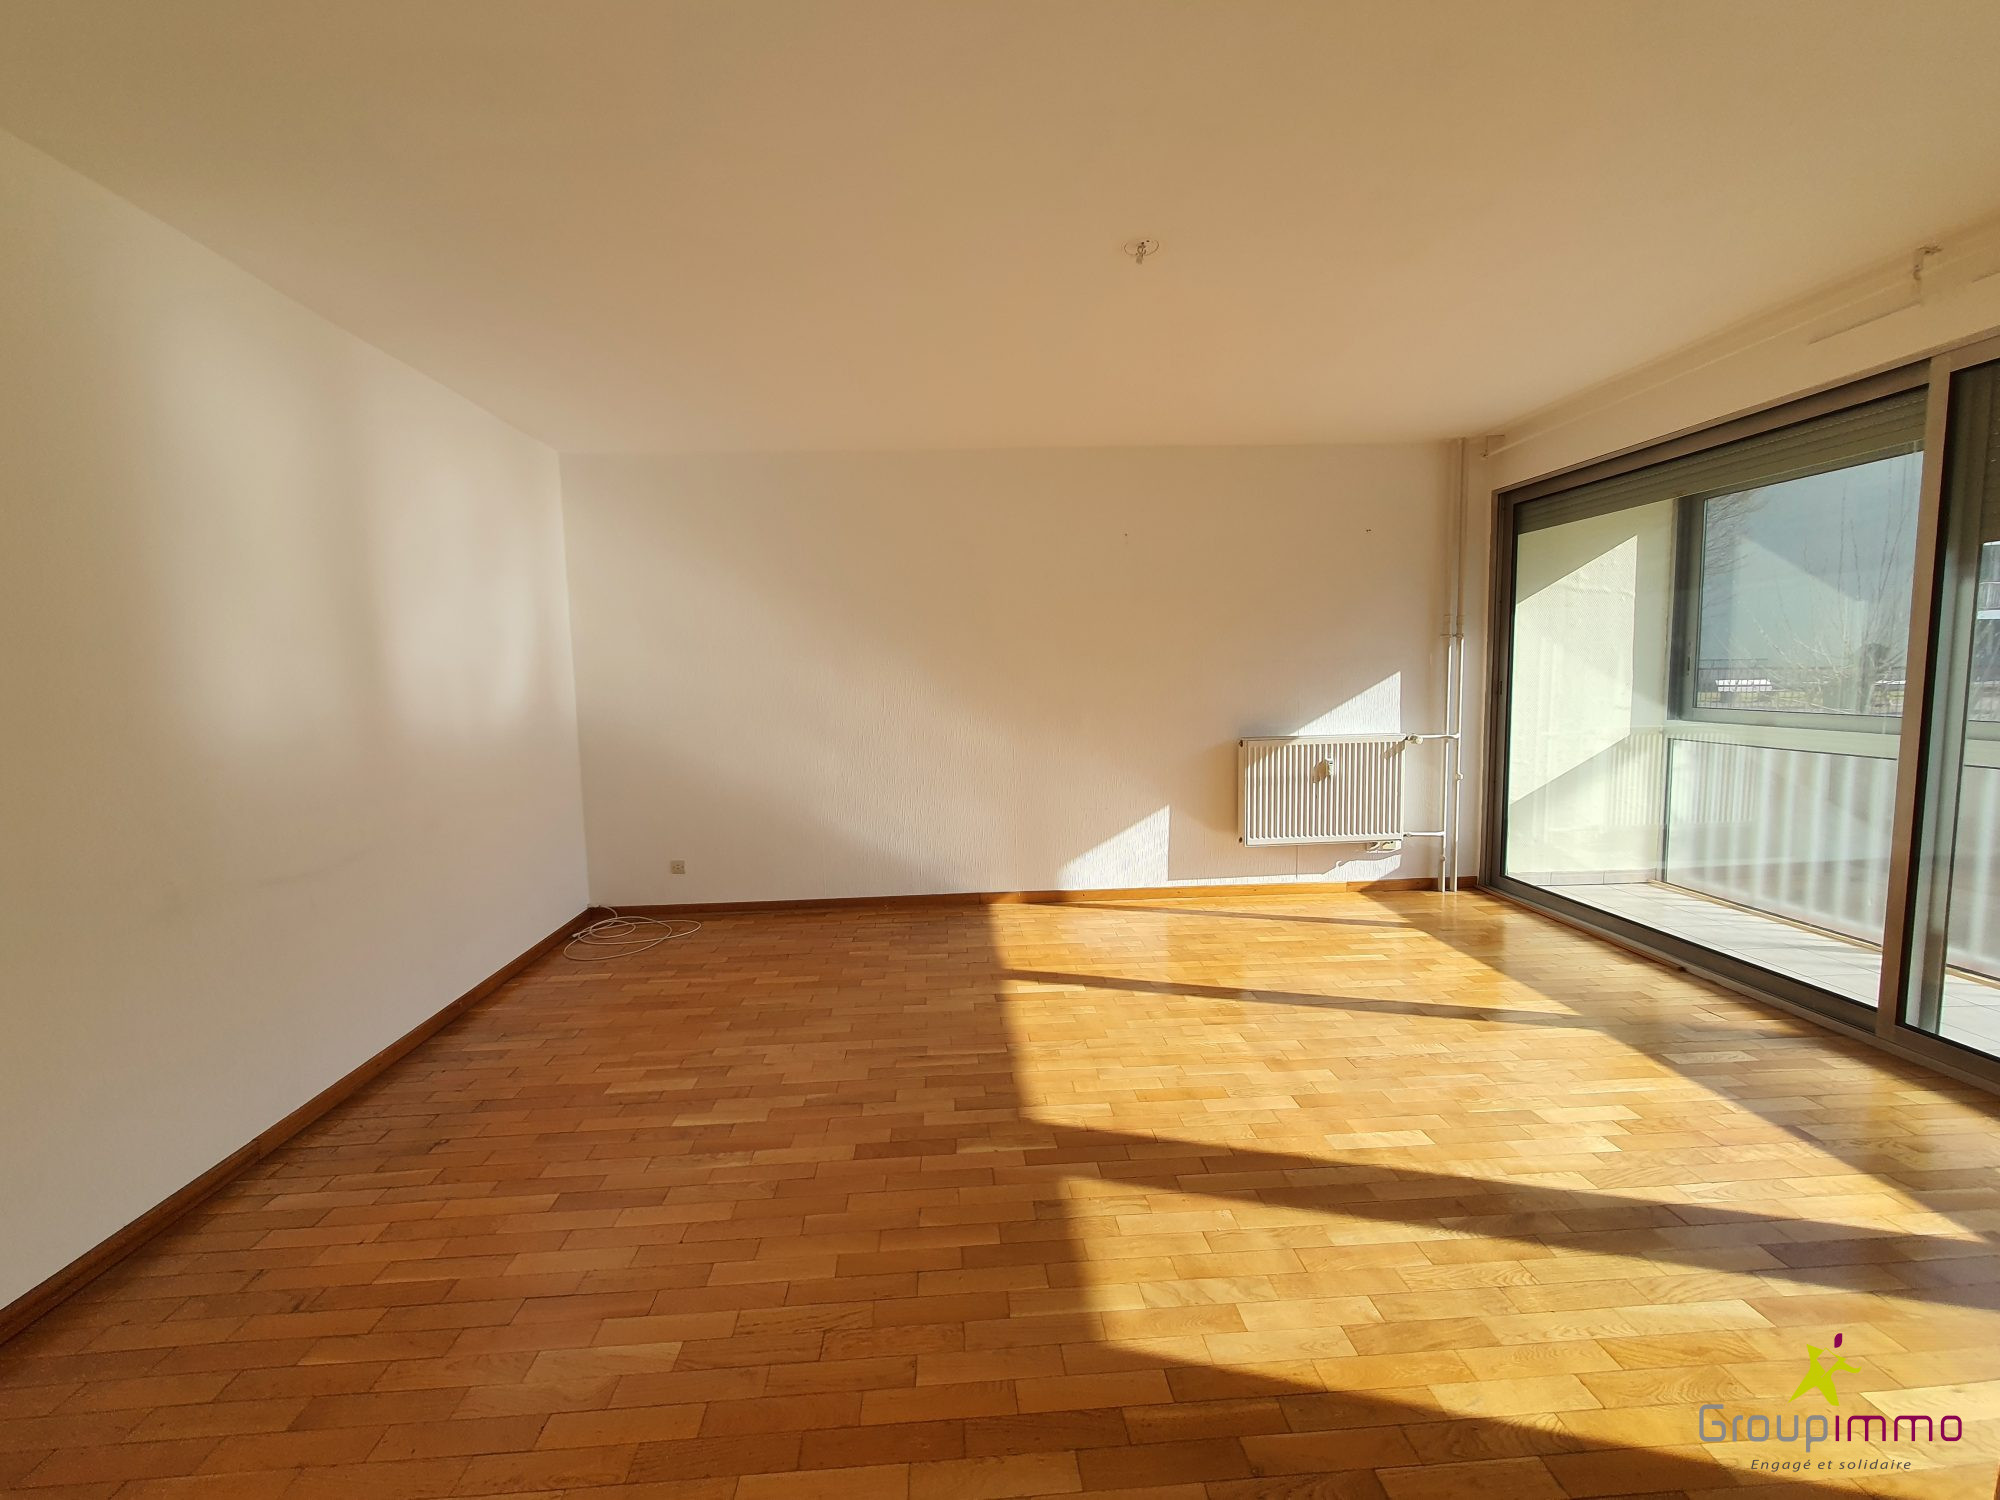 Vente Appartement 85m² 4 Pièces à Illkirch-Graffenstaden (67400) - Groupimmo